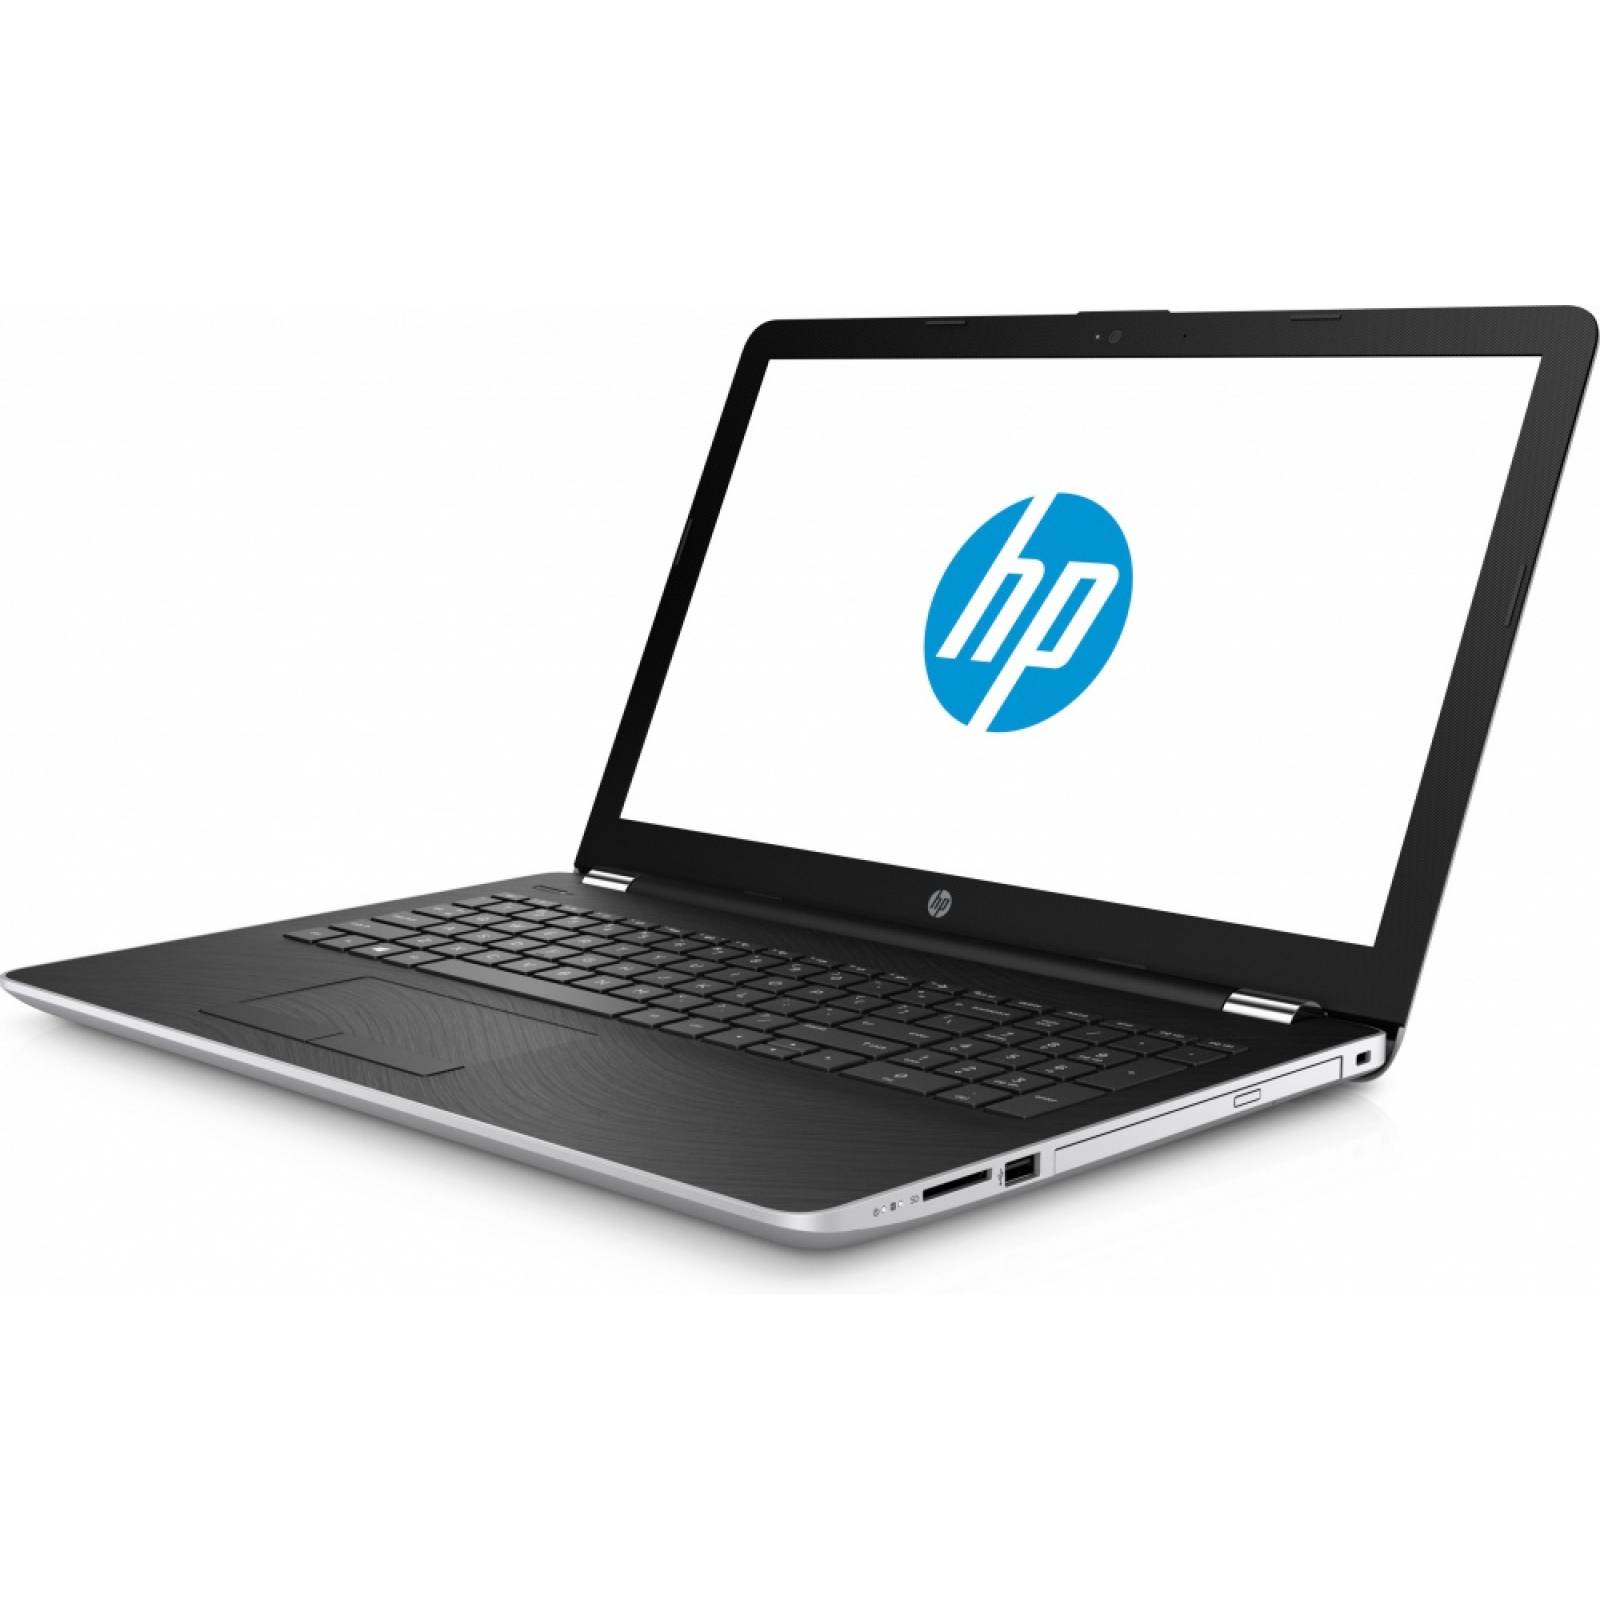 Laptop HP 15.6 6GB/1TB i7-7500U HDMI USB 15-B053 - Reacondicionado